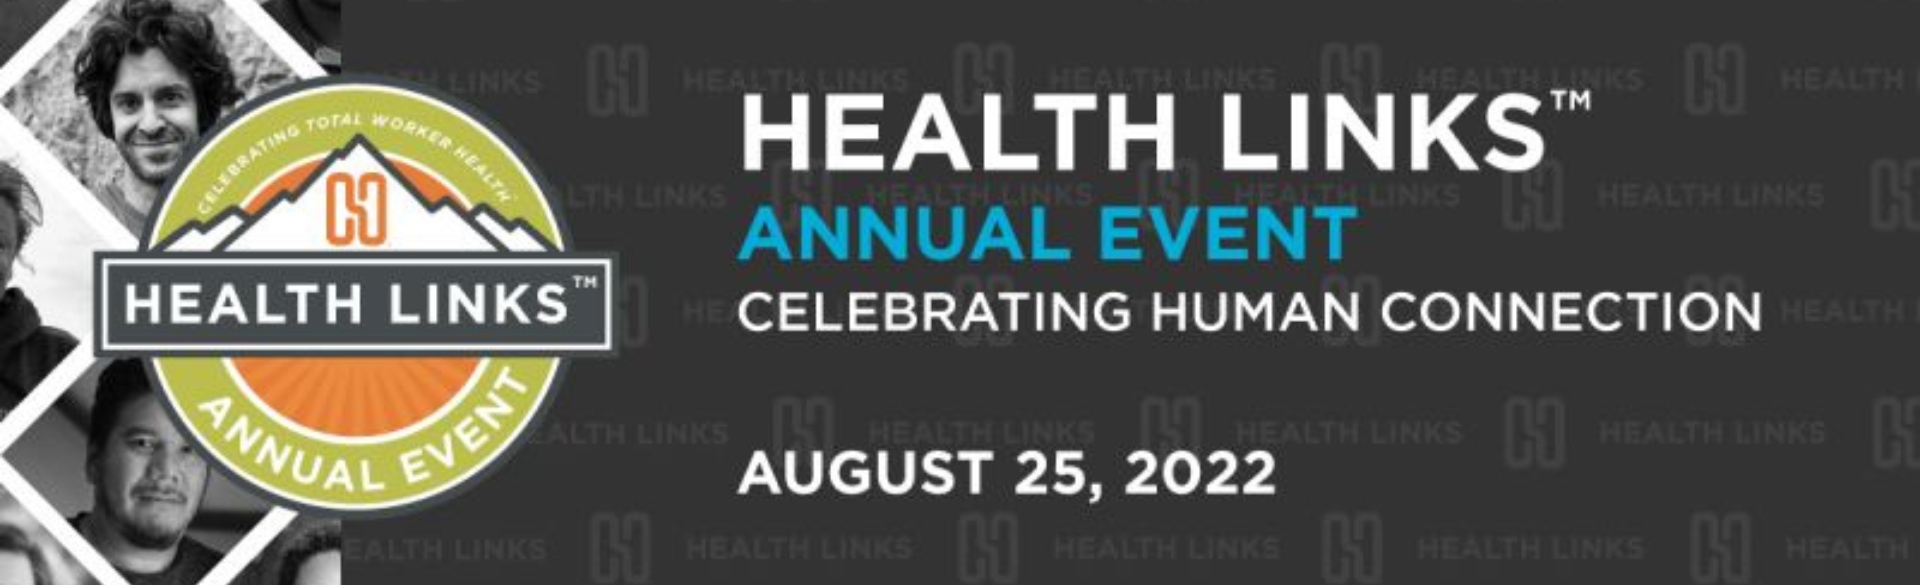 Health Links Annual Event Logo